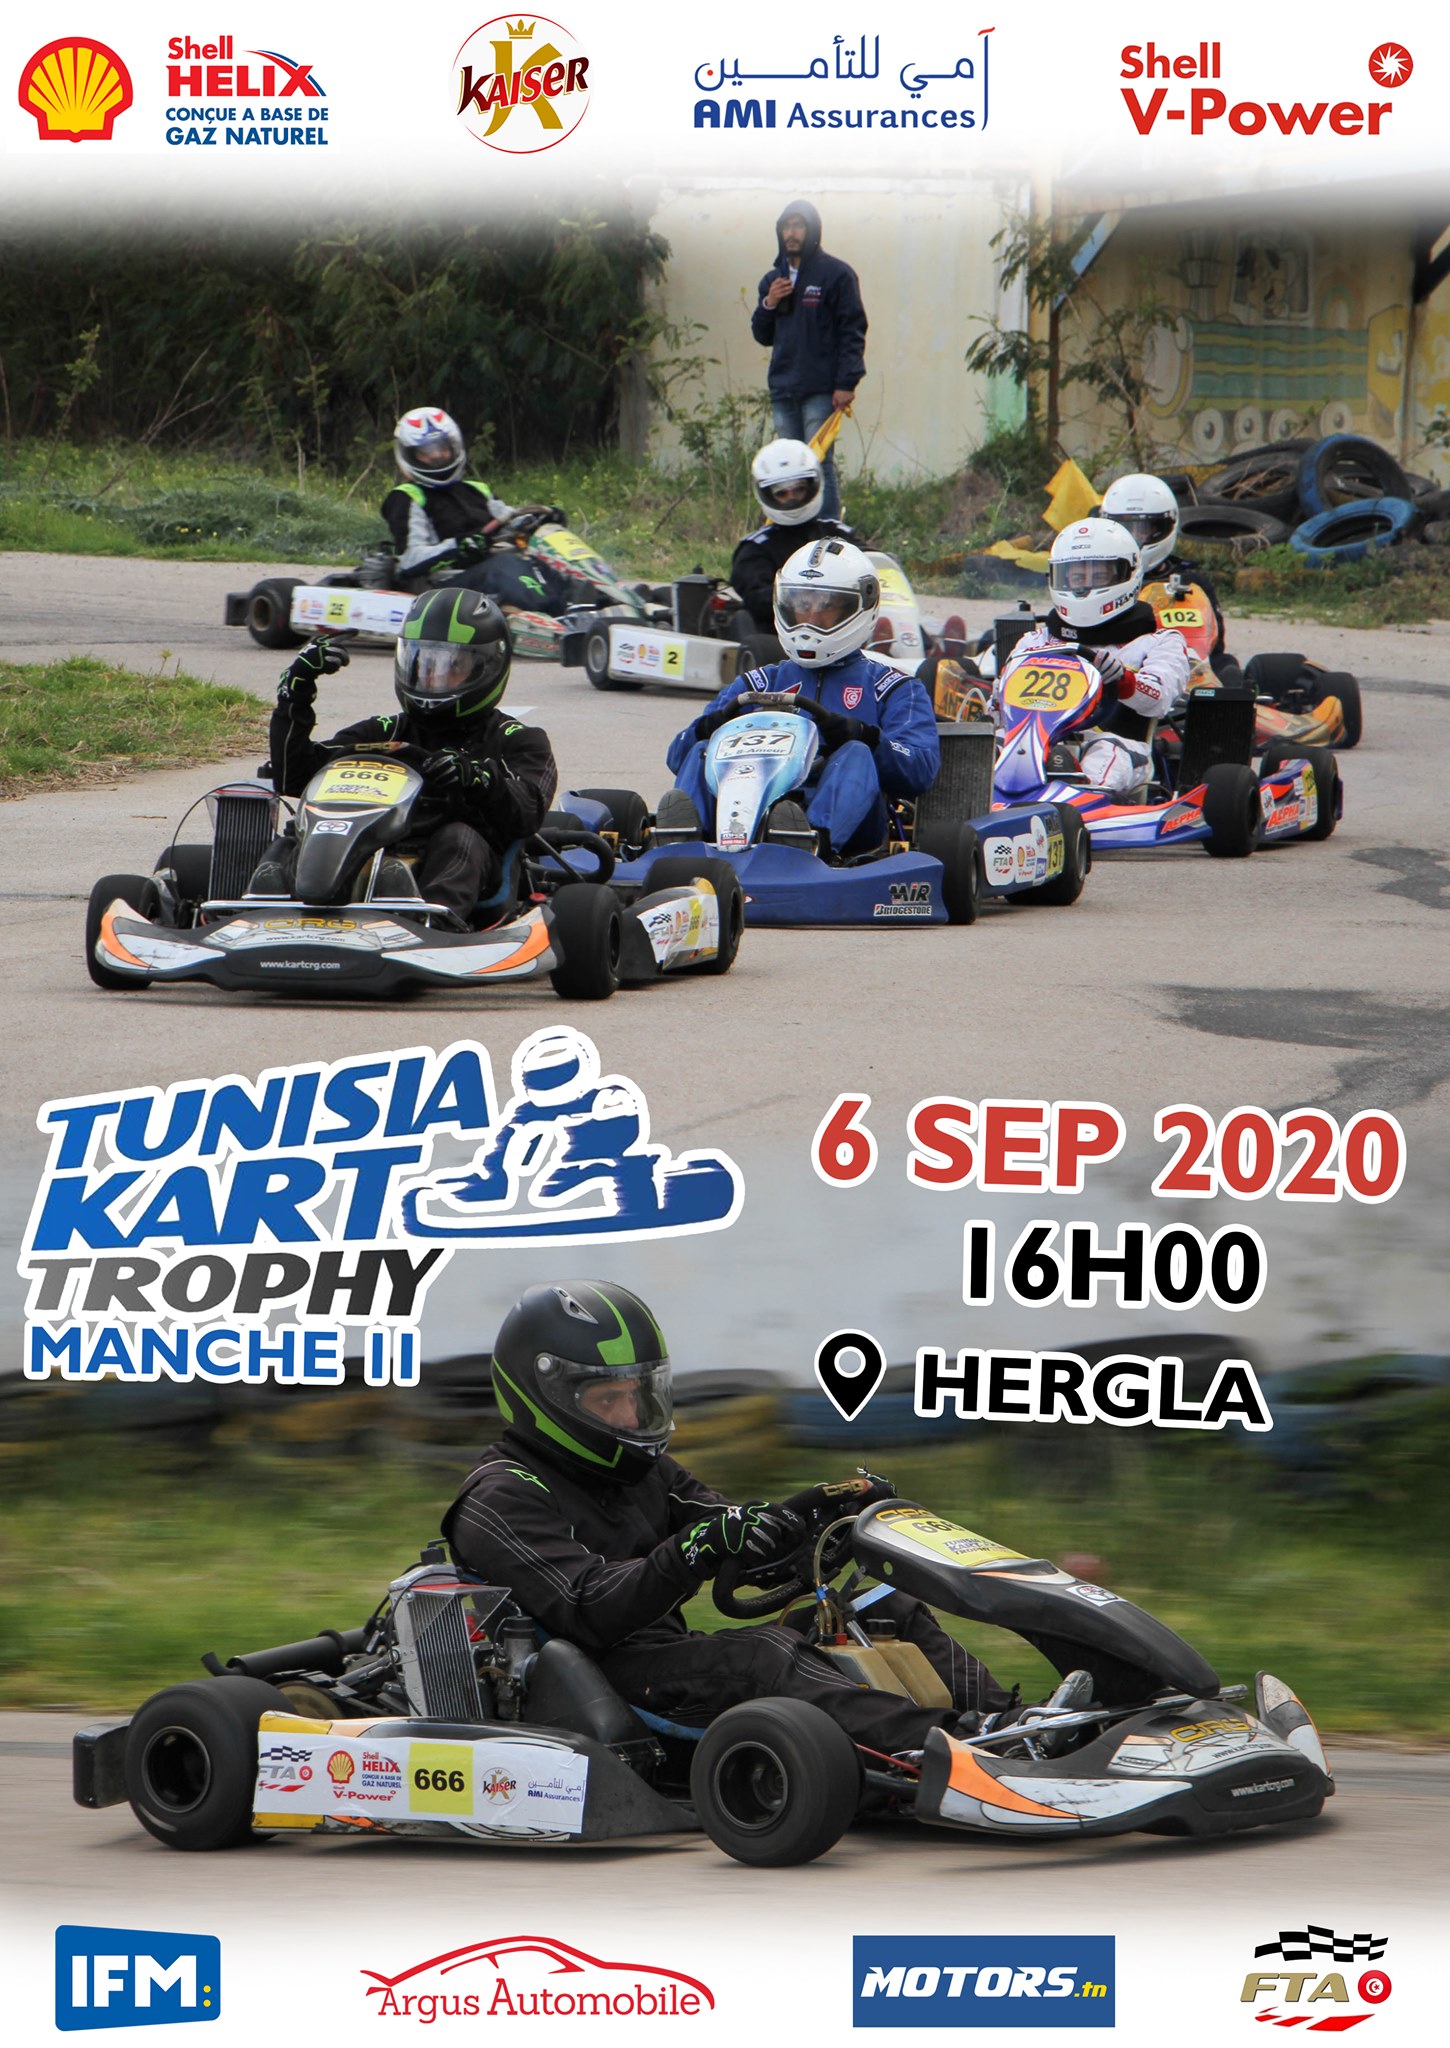 Manche 2 – Tunisia Kart Trophy 2020